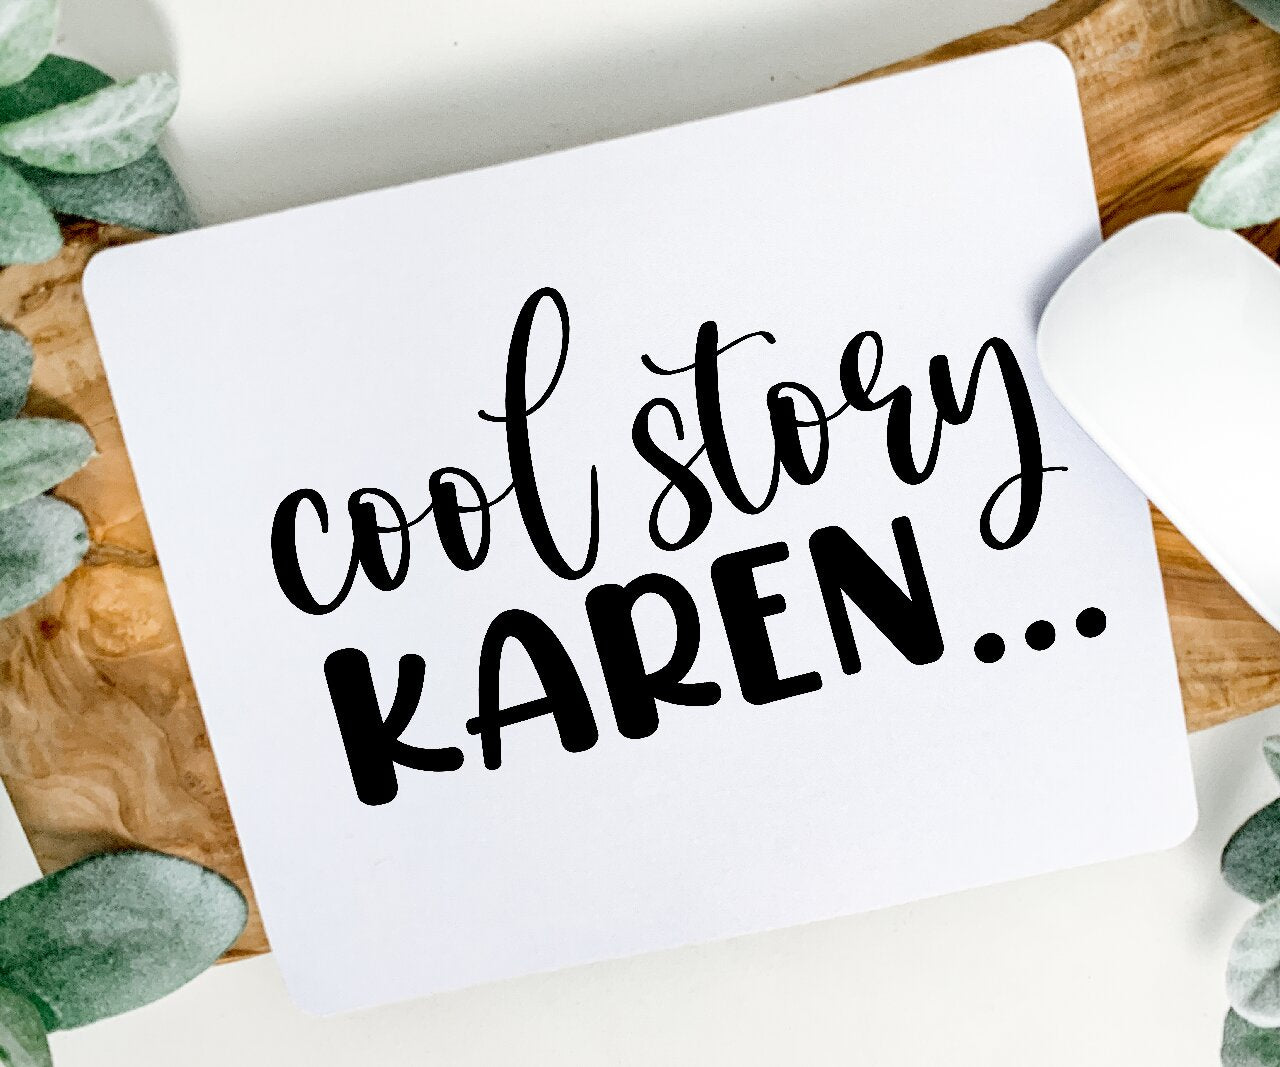 Cool Story Karen... - Mouse Pad